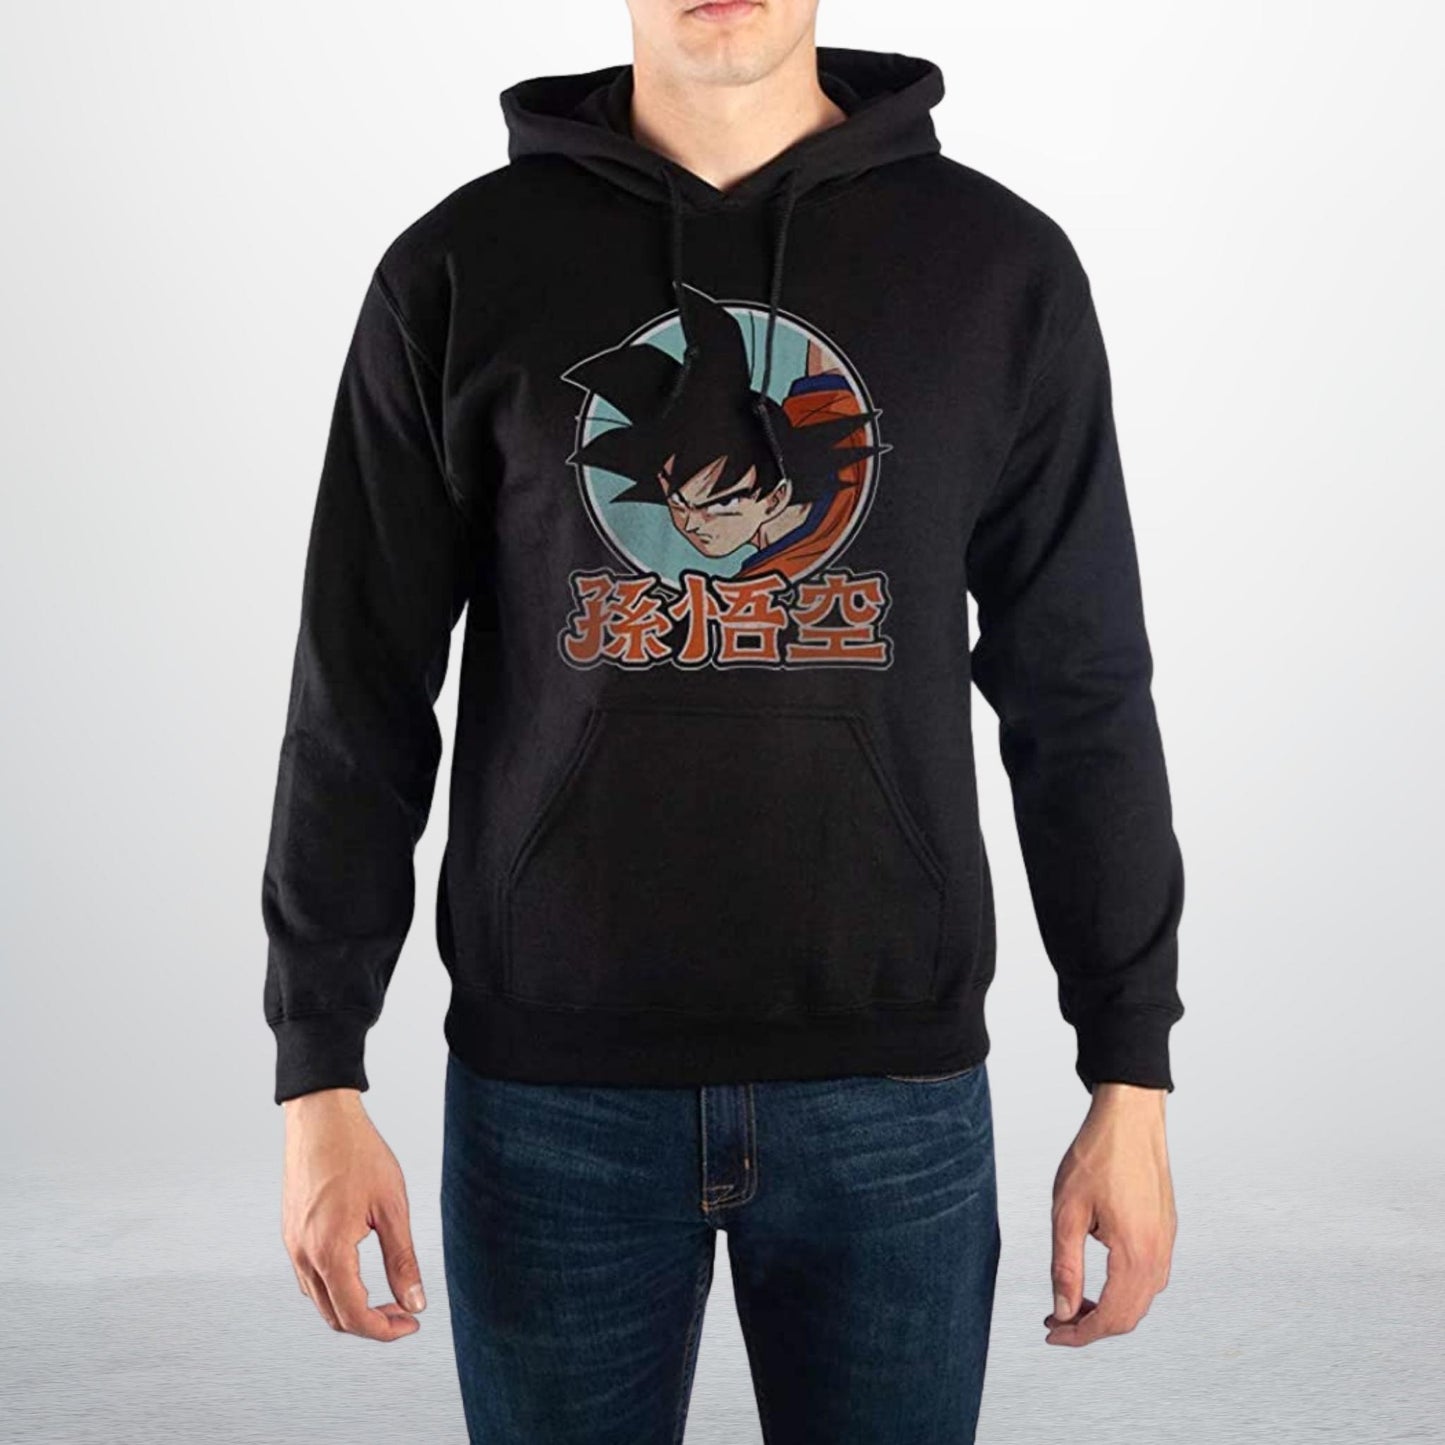 *Clearance* Goku Distressed Kanji (Dragon Ball Z) Black Pullover Hoodie Sweatshirt